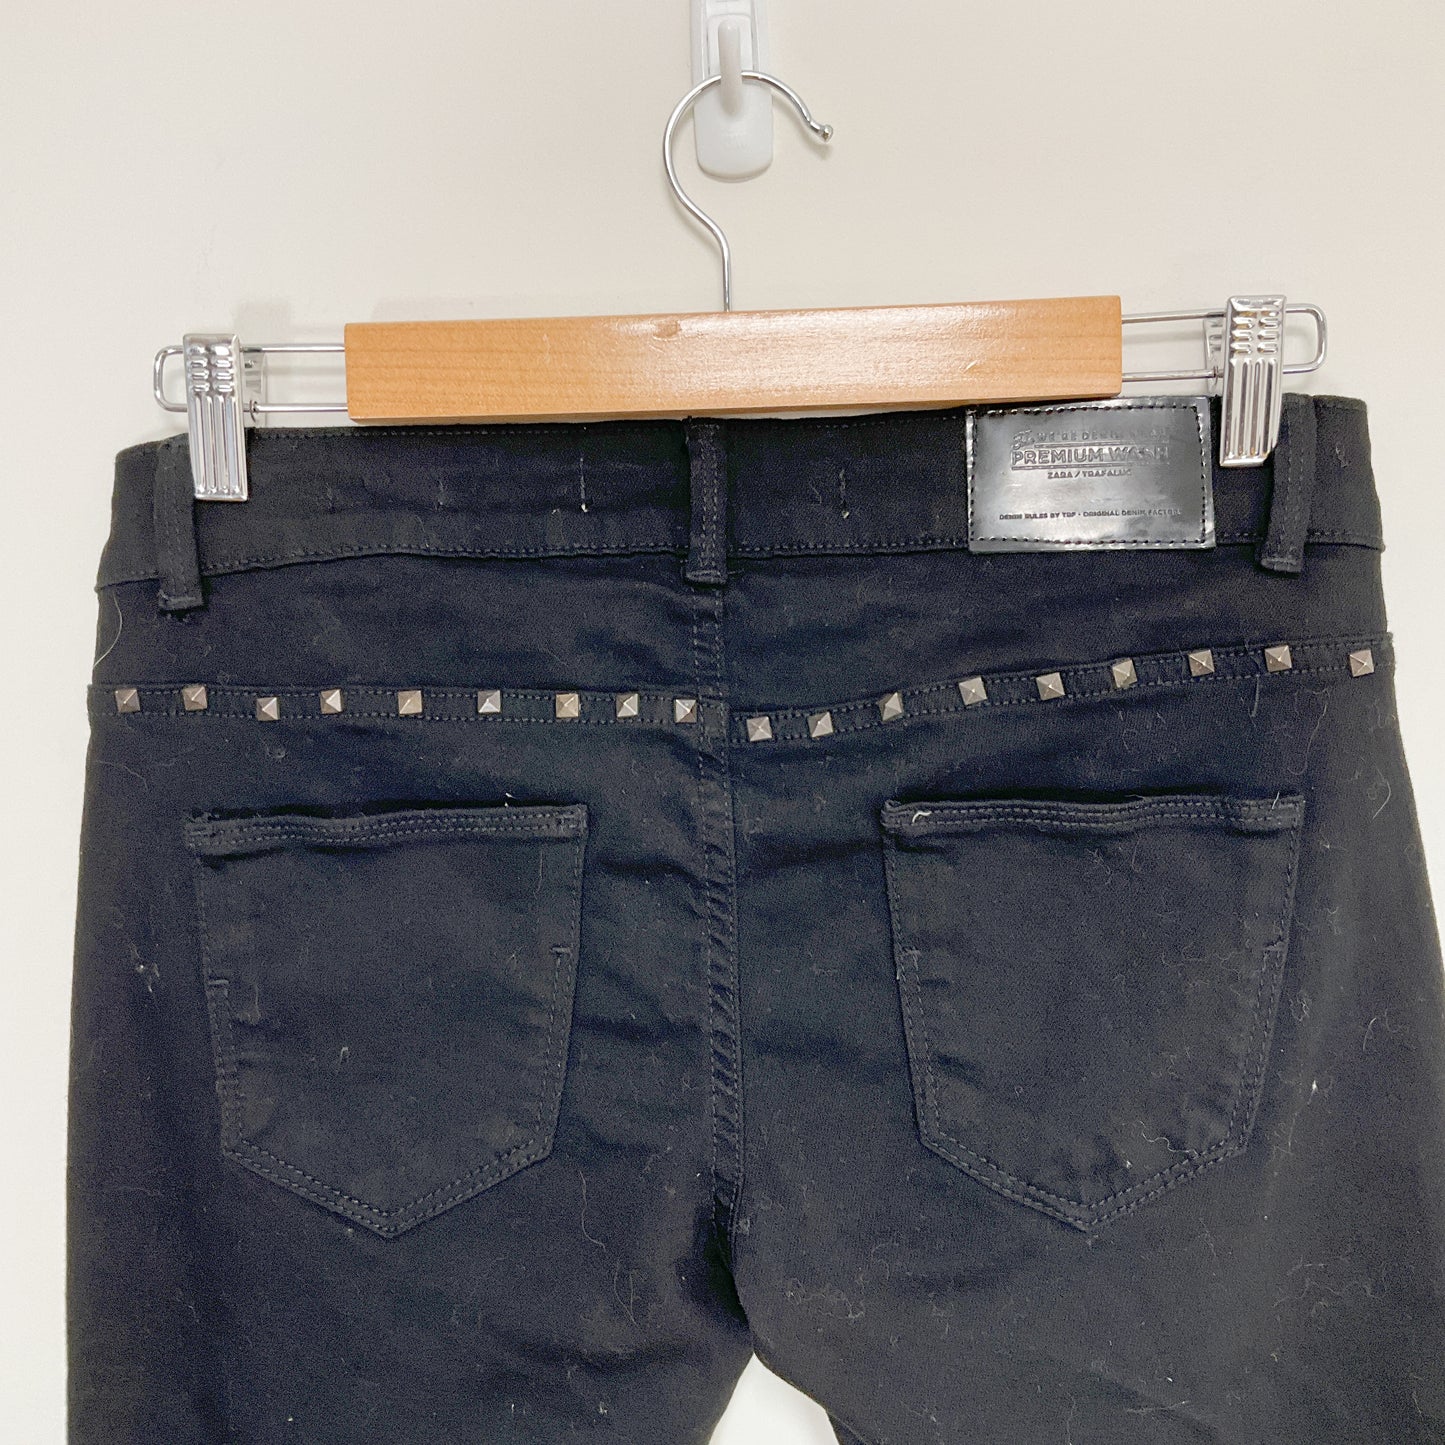 Zara - Premium Wash Skinny Jeans